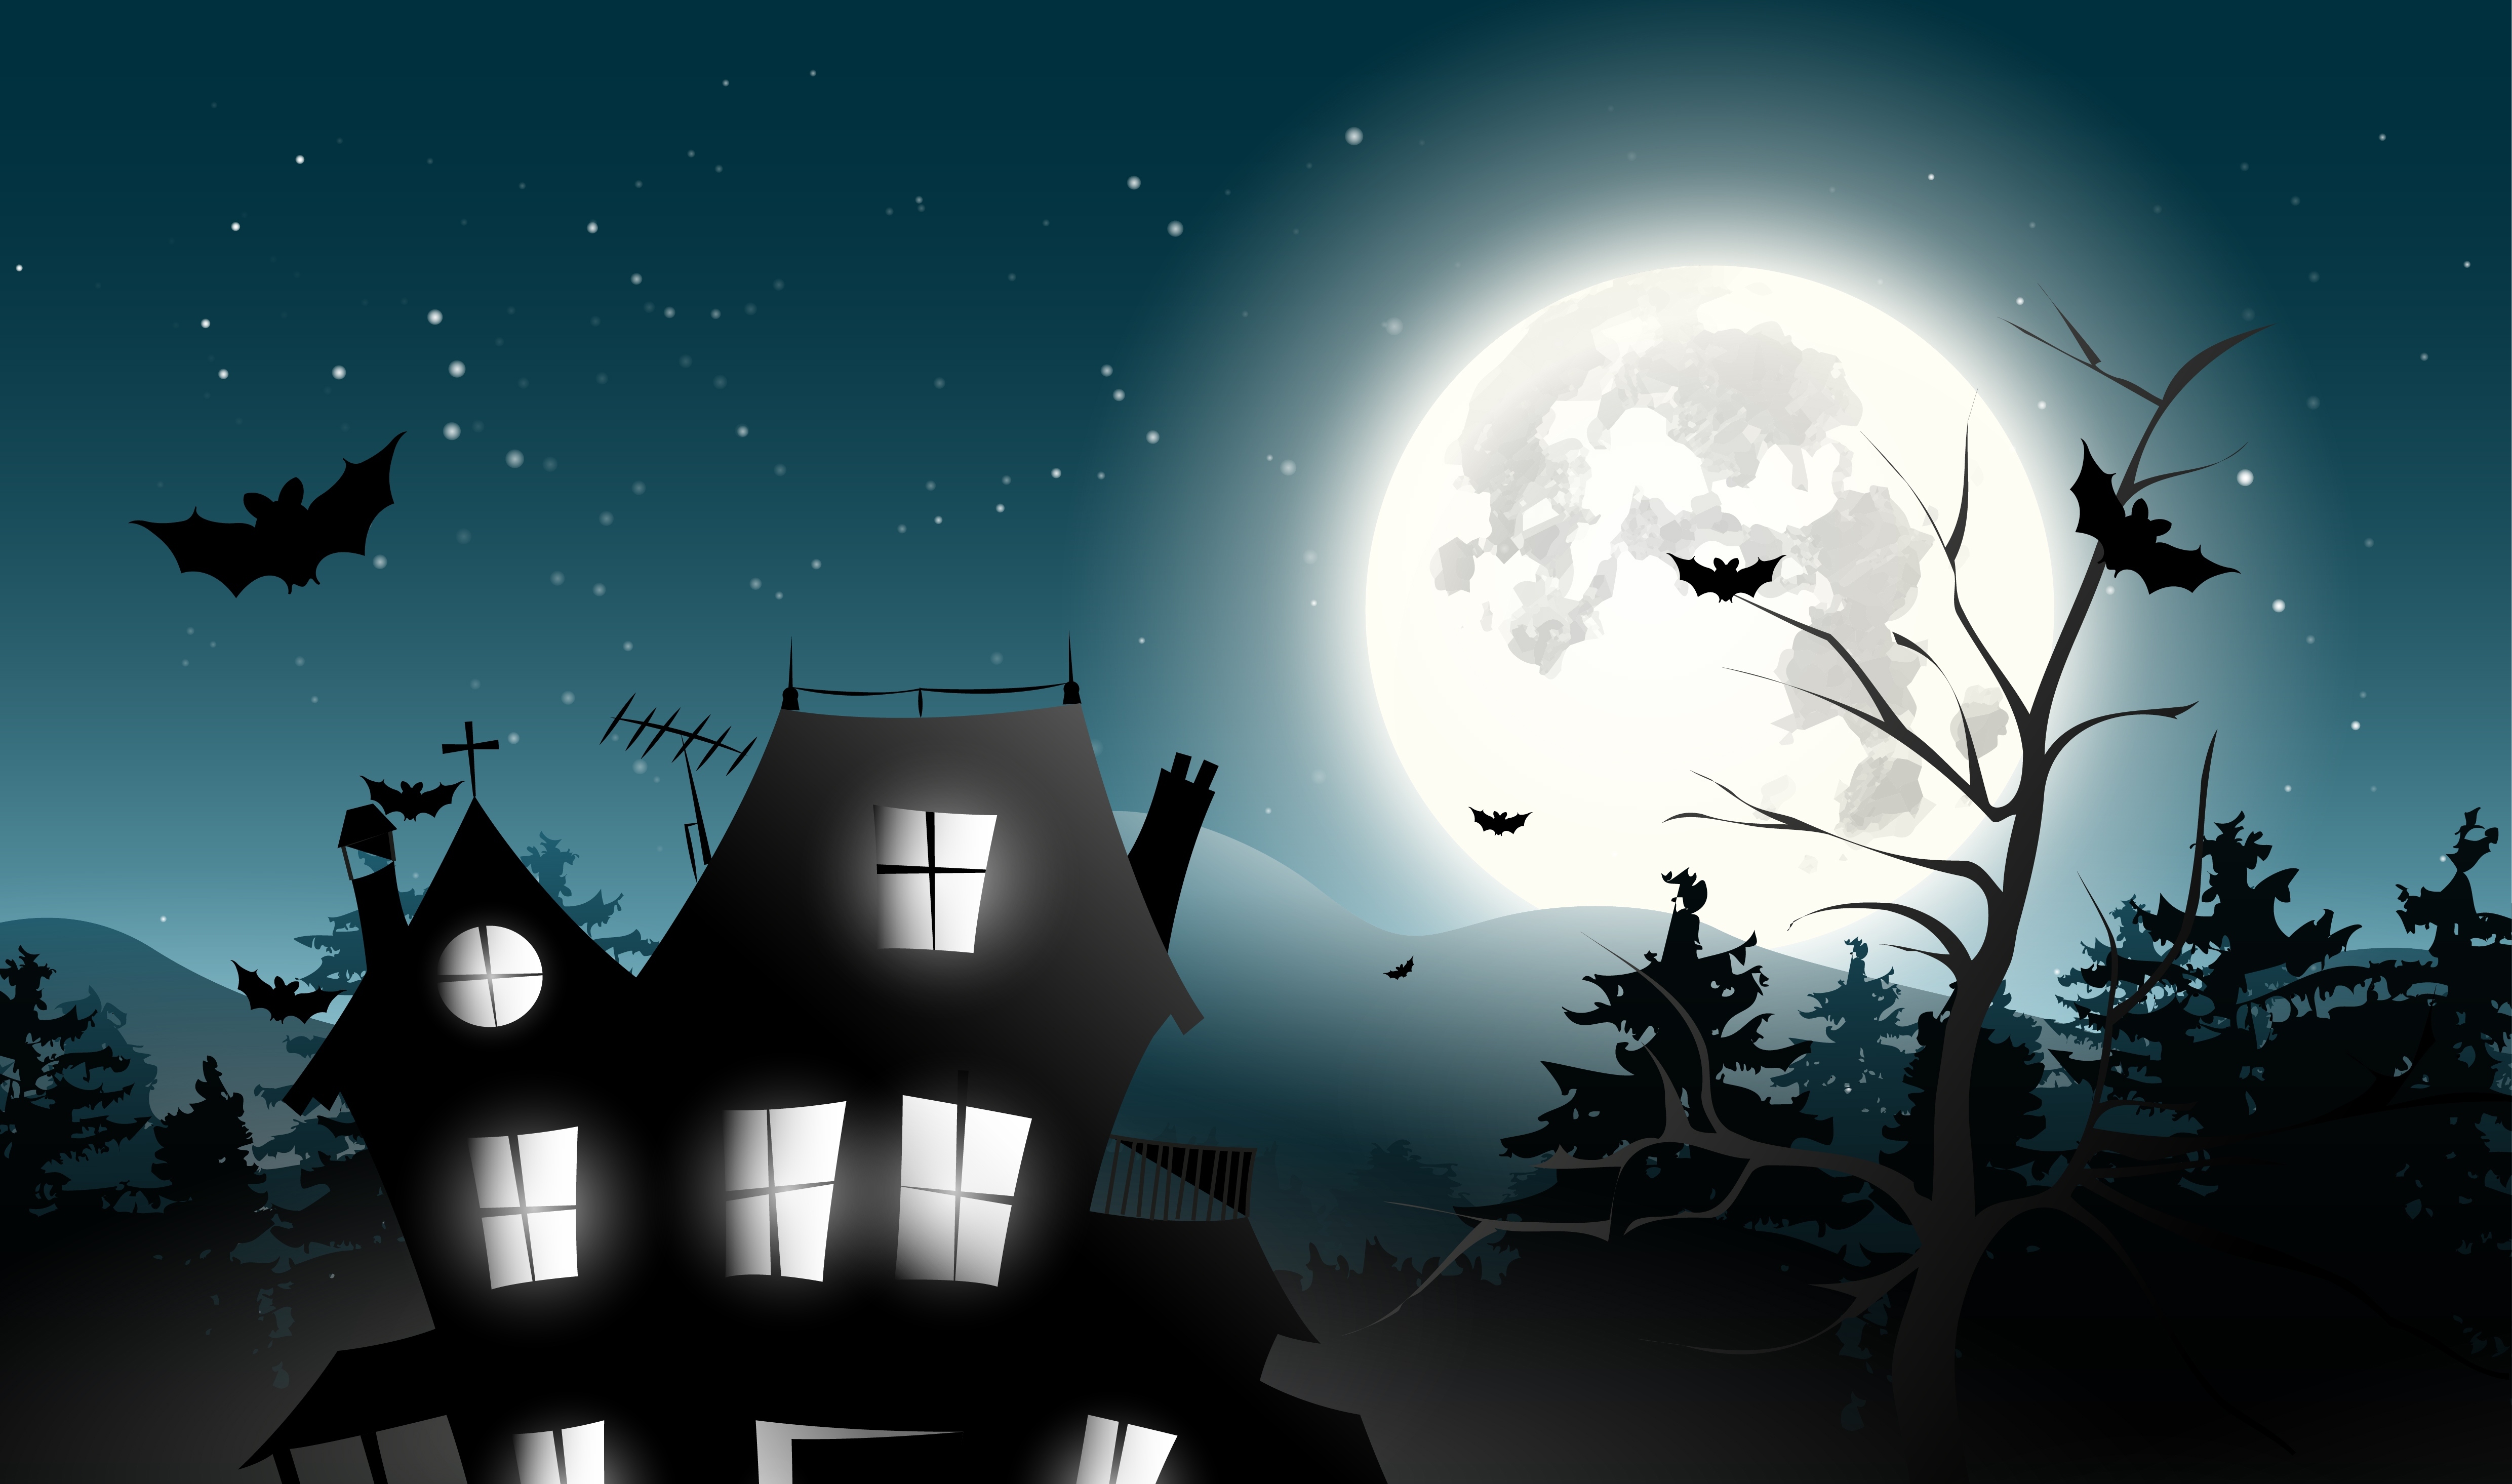 Домик на луне. Хэллоуин пейзаж. Страшный дом Хэллоуин. Сказочная ночь. Хэллоуин обои.